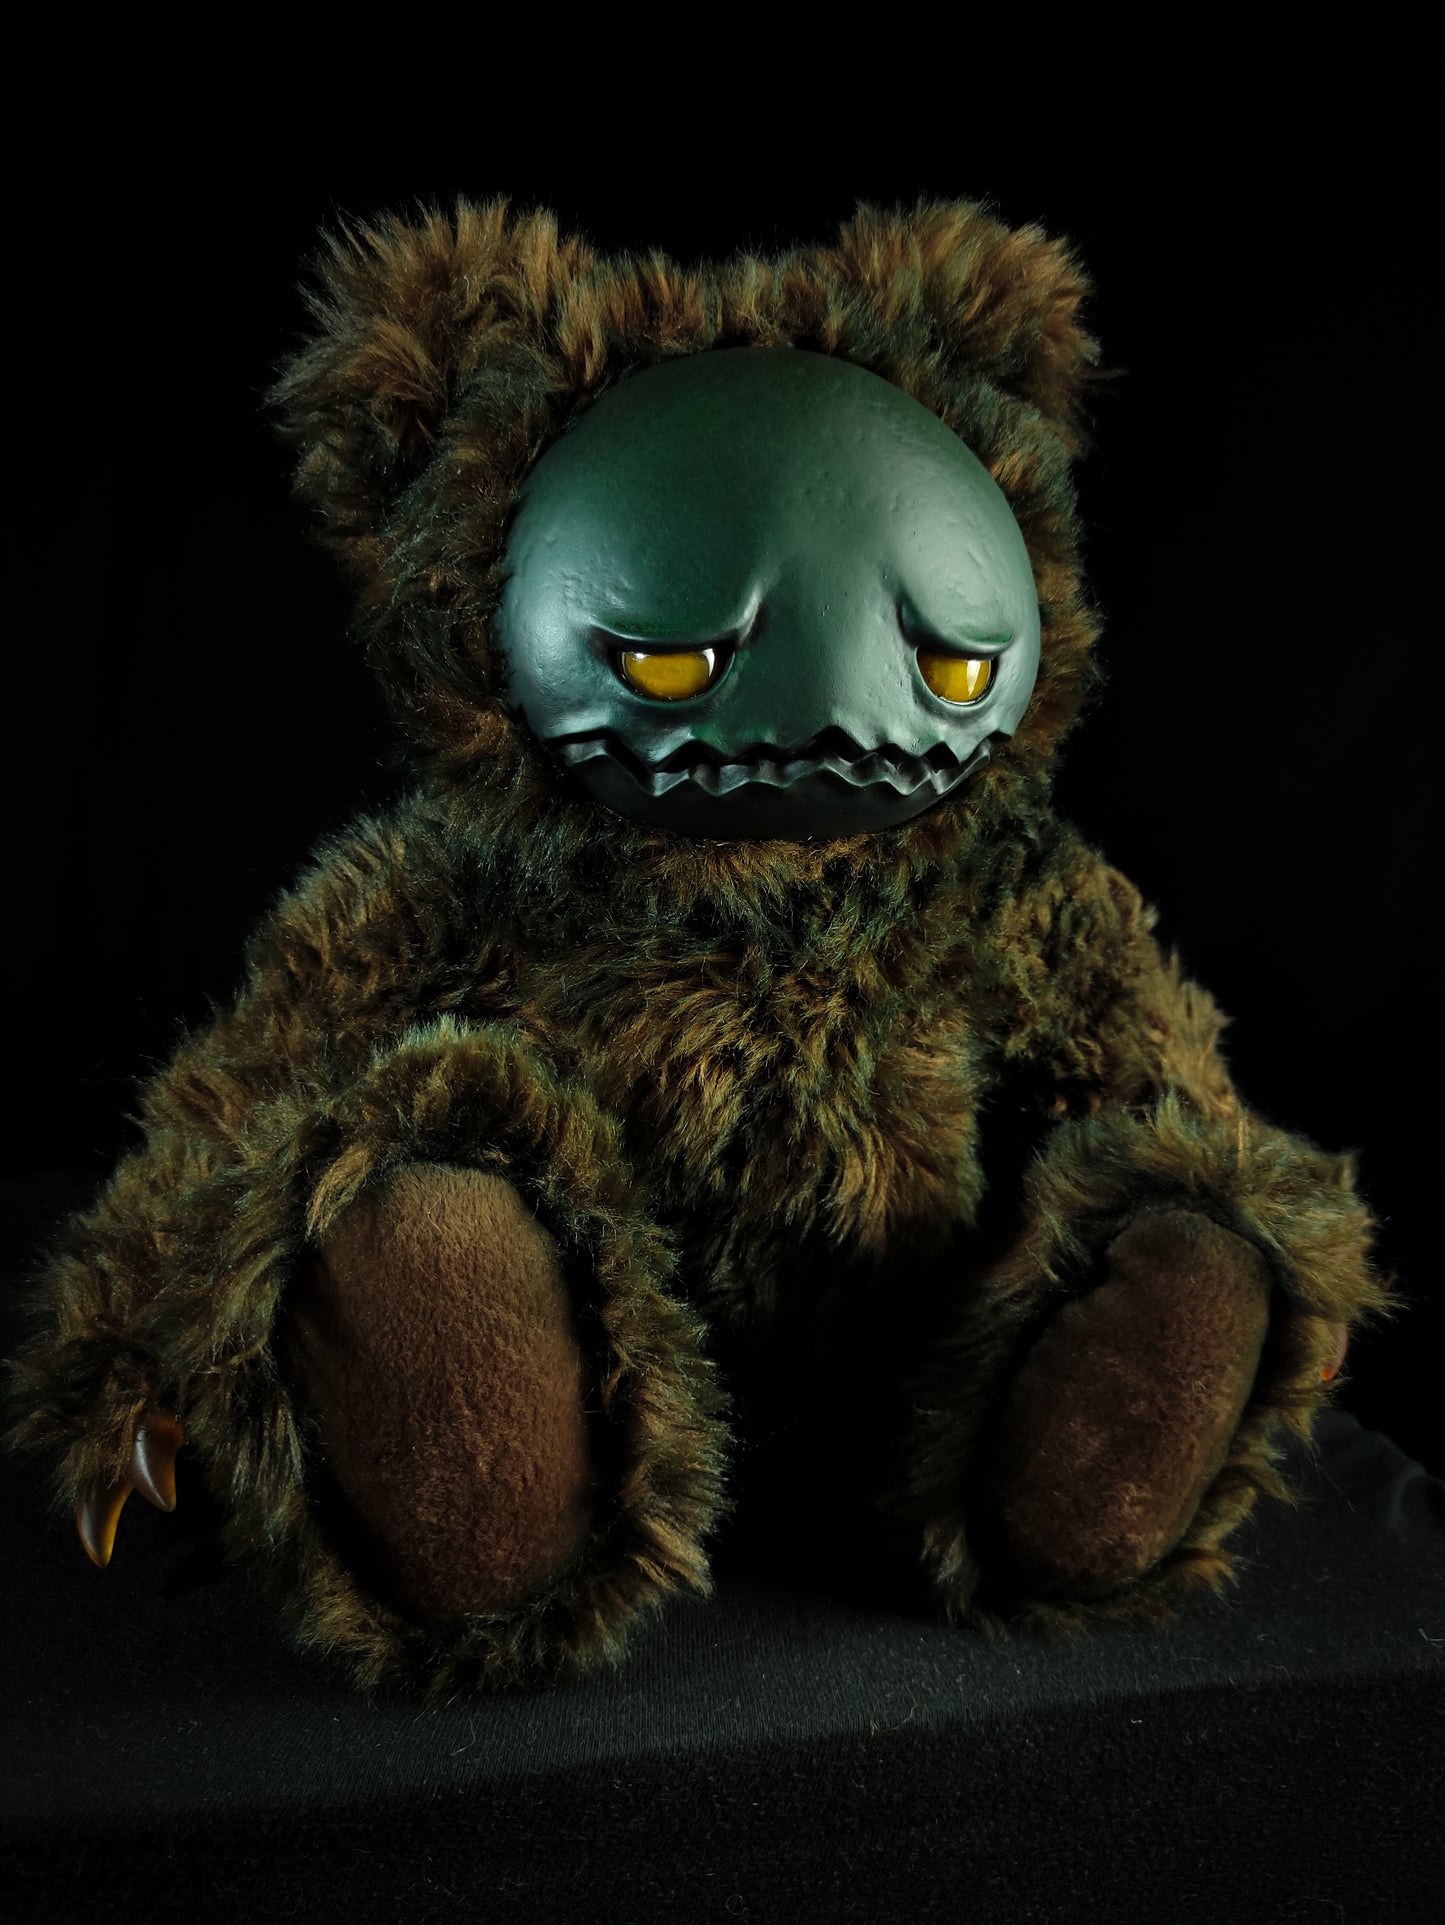 Gosia (Mean Green Ver.) - Monster Art Doll Plush Toy